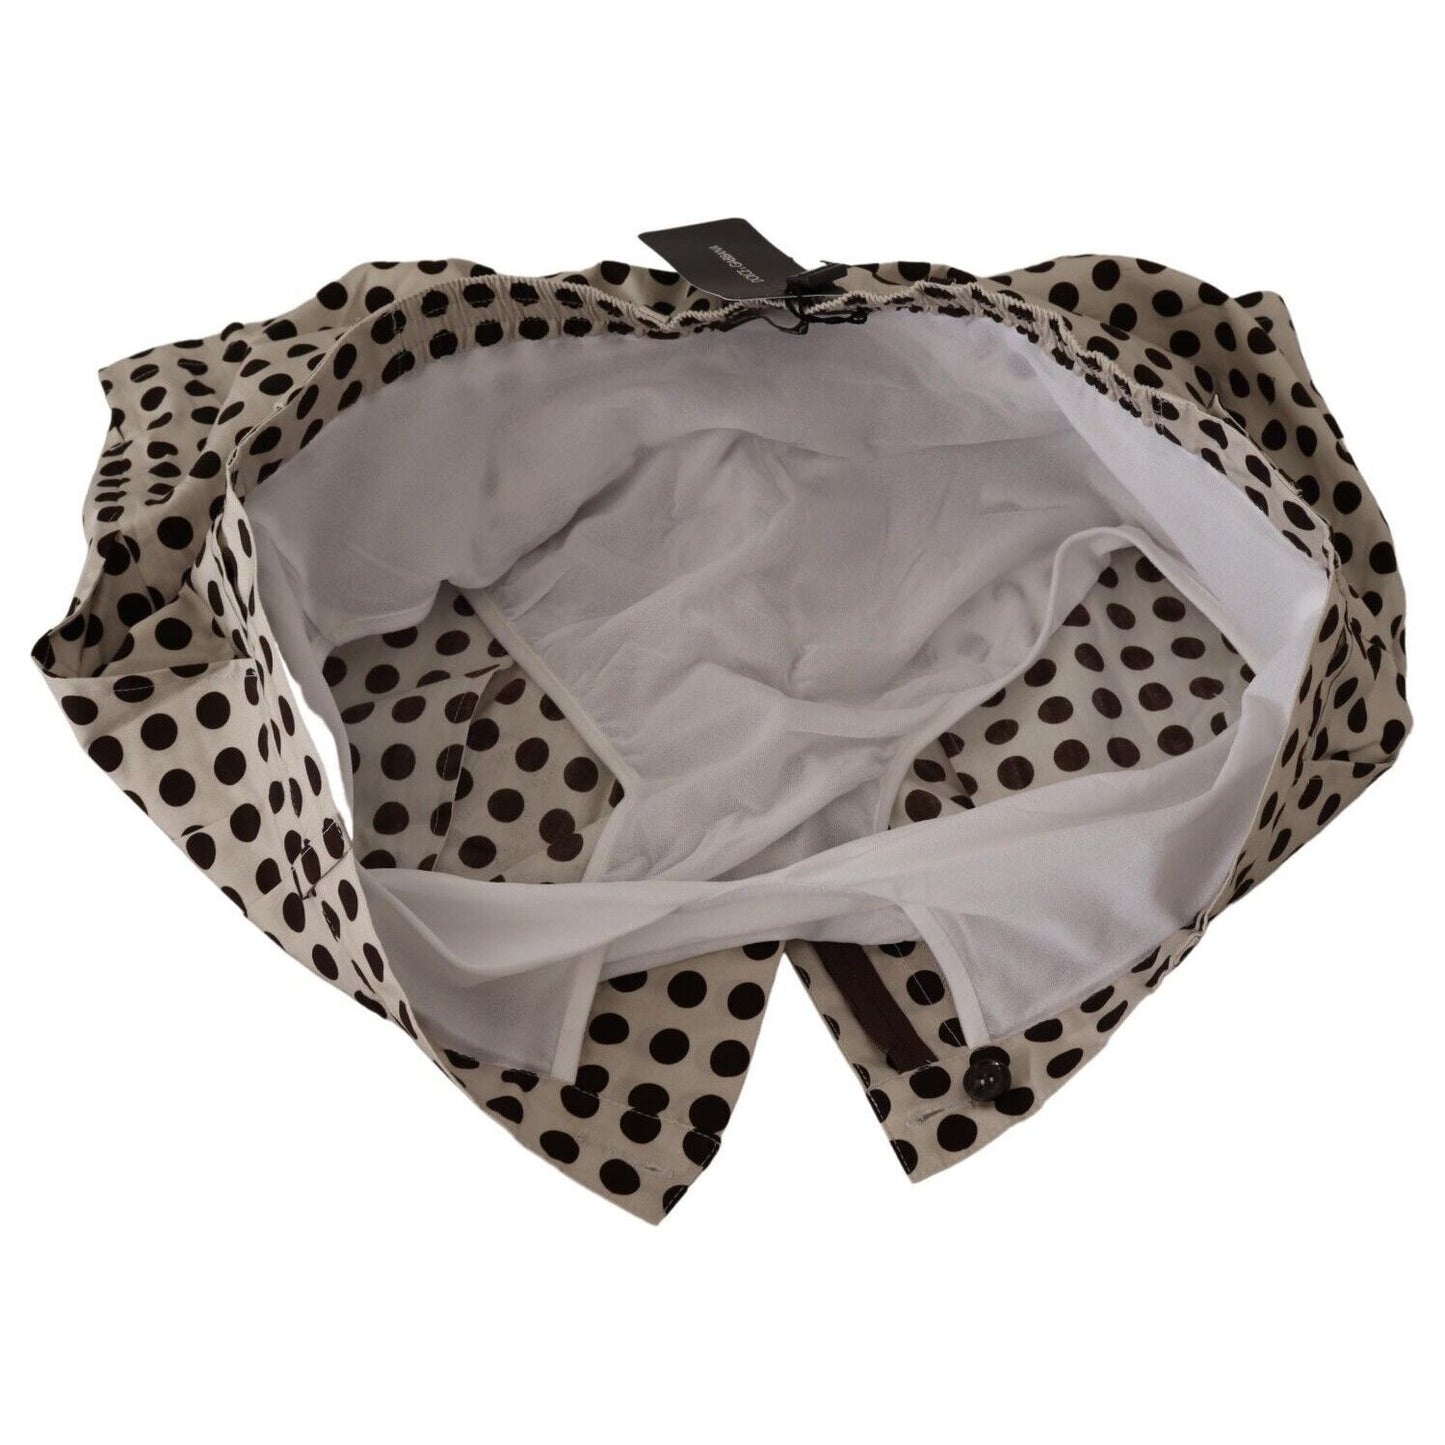 Dolce & Gabbana Elegant Polka Dot Cotton Shorts black-white-polka-dots-cotton-linen-shorts s-l1600-3-13-d6c0a5ce-e1d.jpg